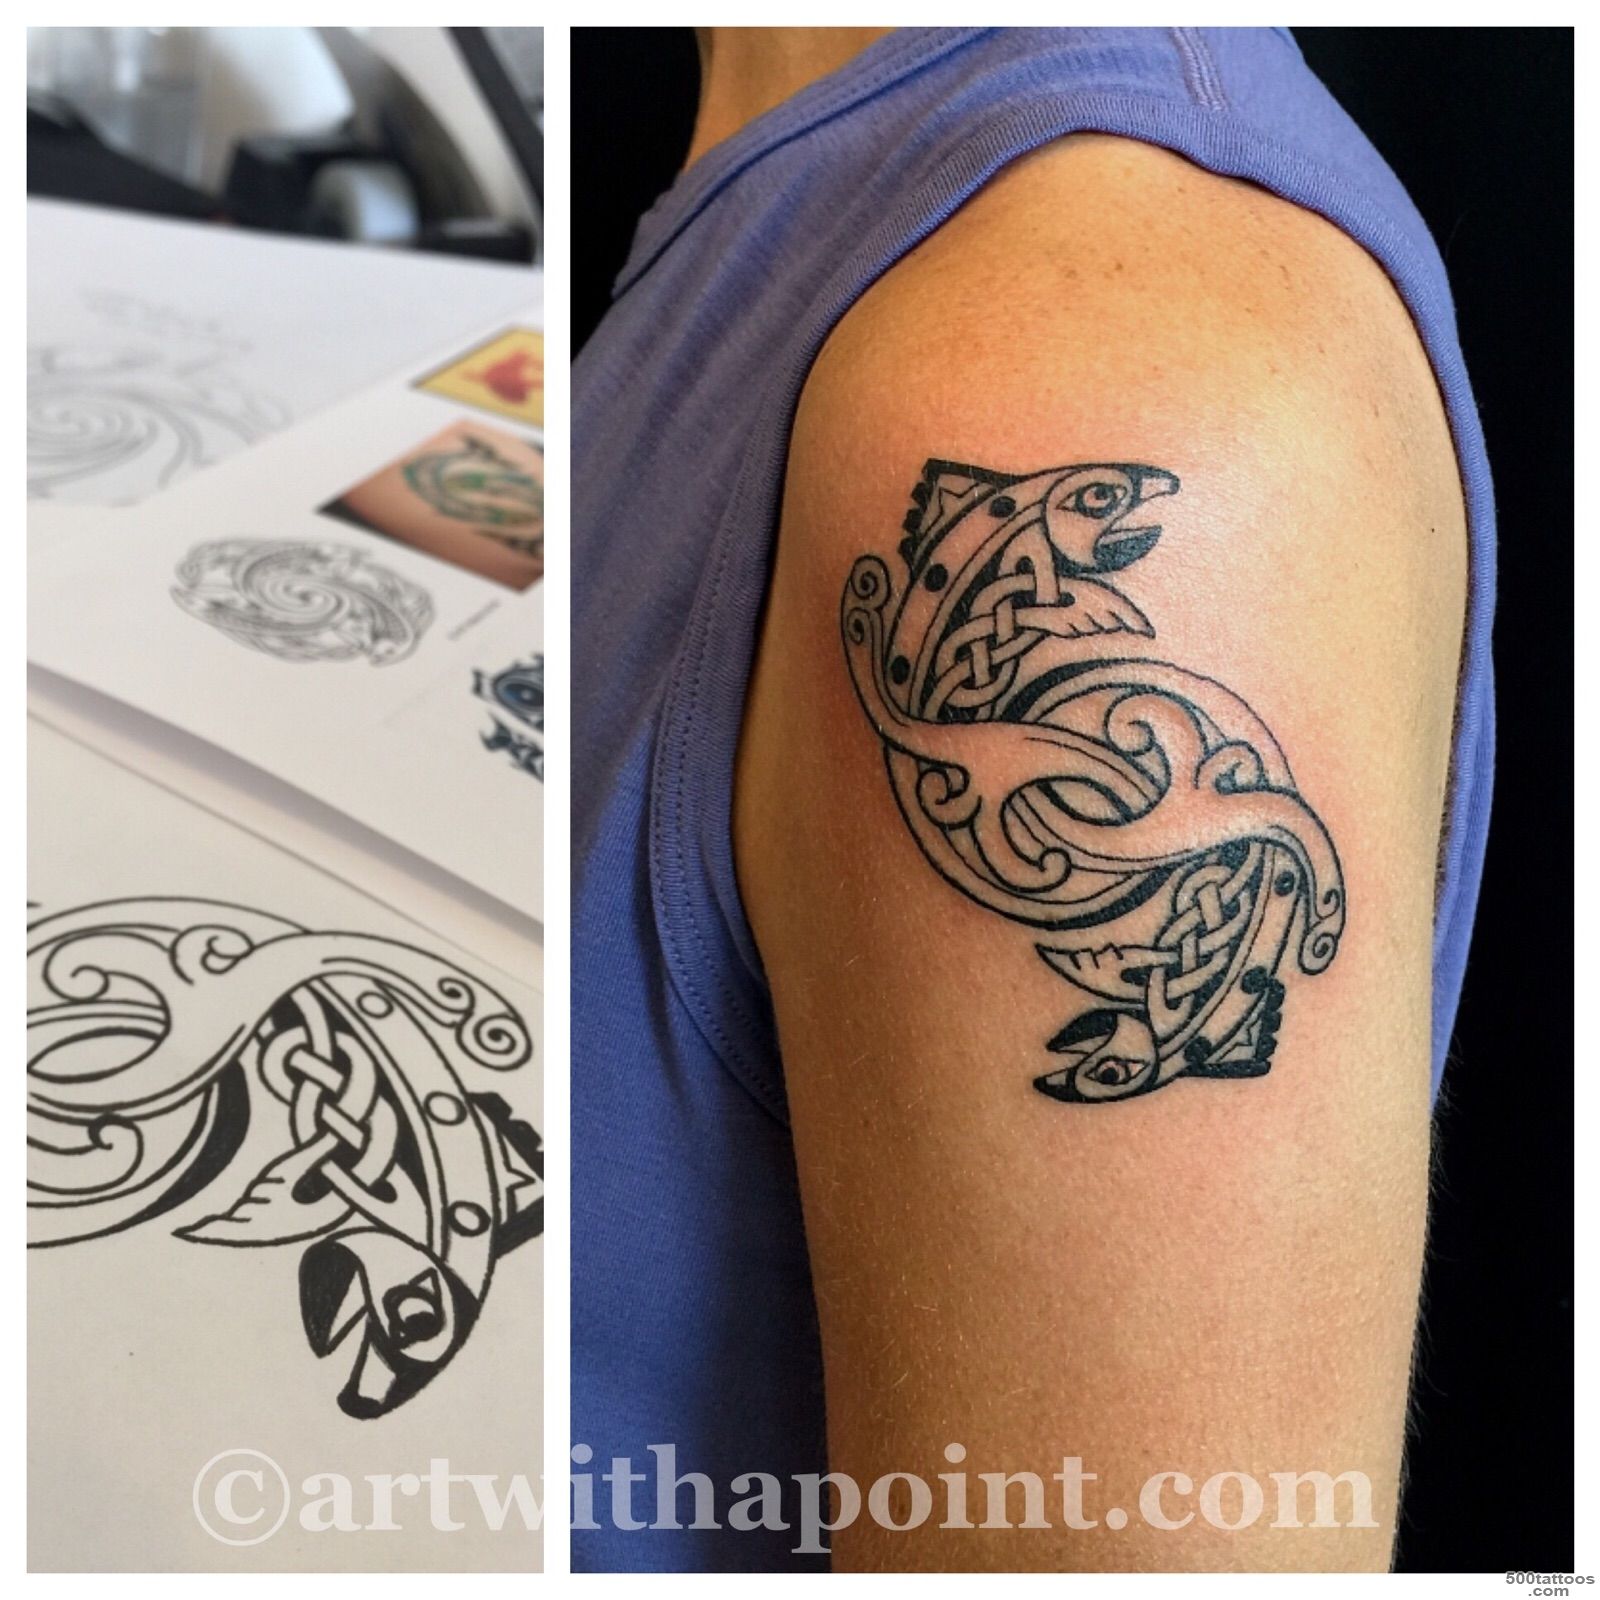 Celtic   Art With A Point  Custom Tattoo Studio  Minneapolis ..._22